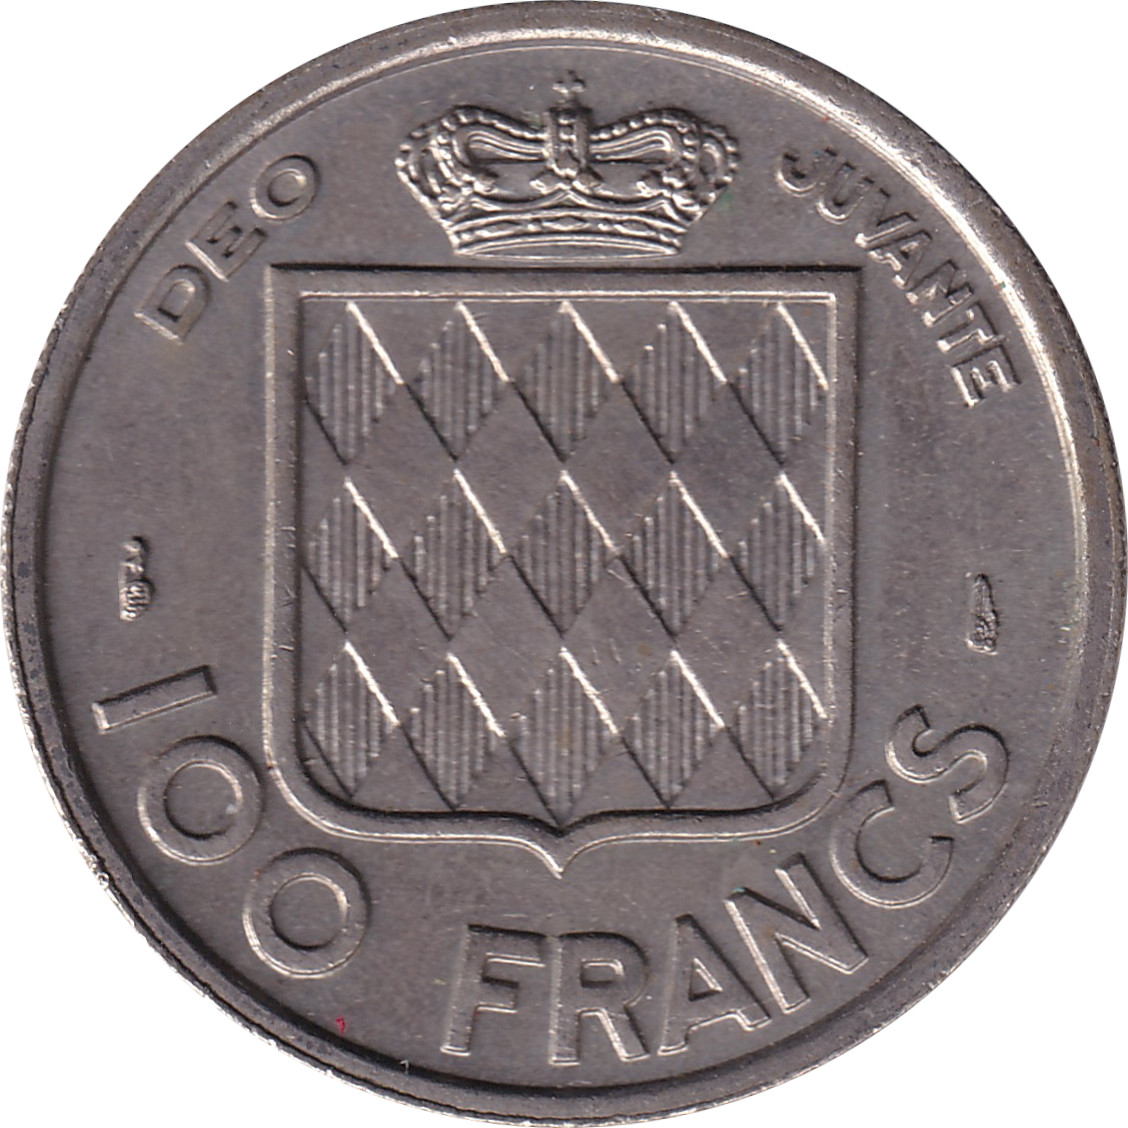 100 francs - Rainier III - Shield